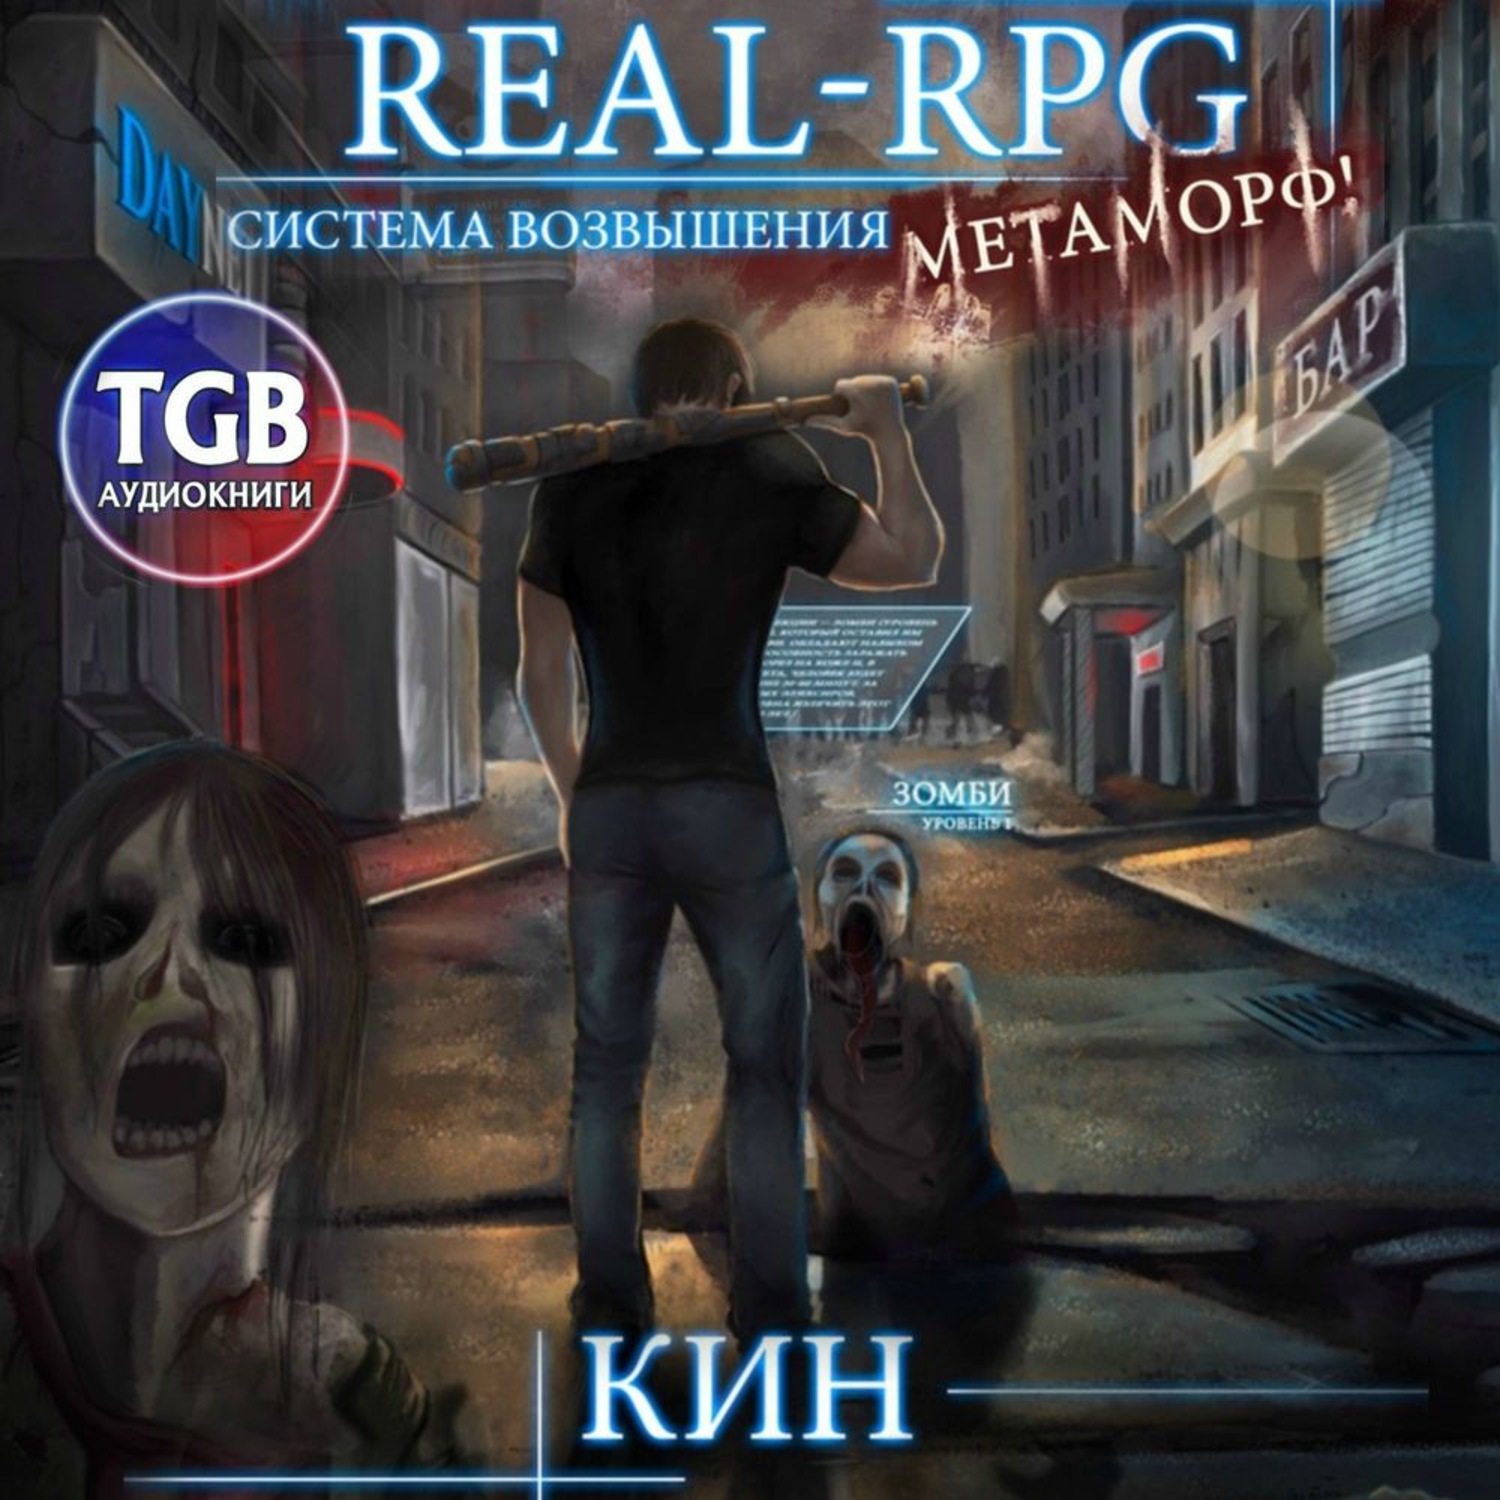 Real rpg аудиокнига. Аудиокнига Реал РПГ. Система возвышения Метаморф. Метаморф Кин. Кин Метаморф книга.